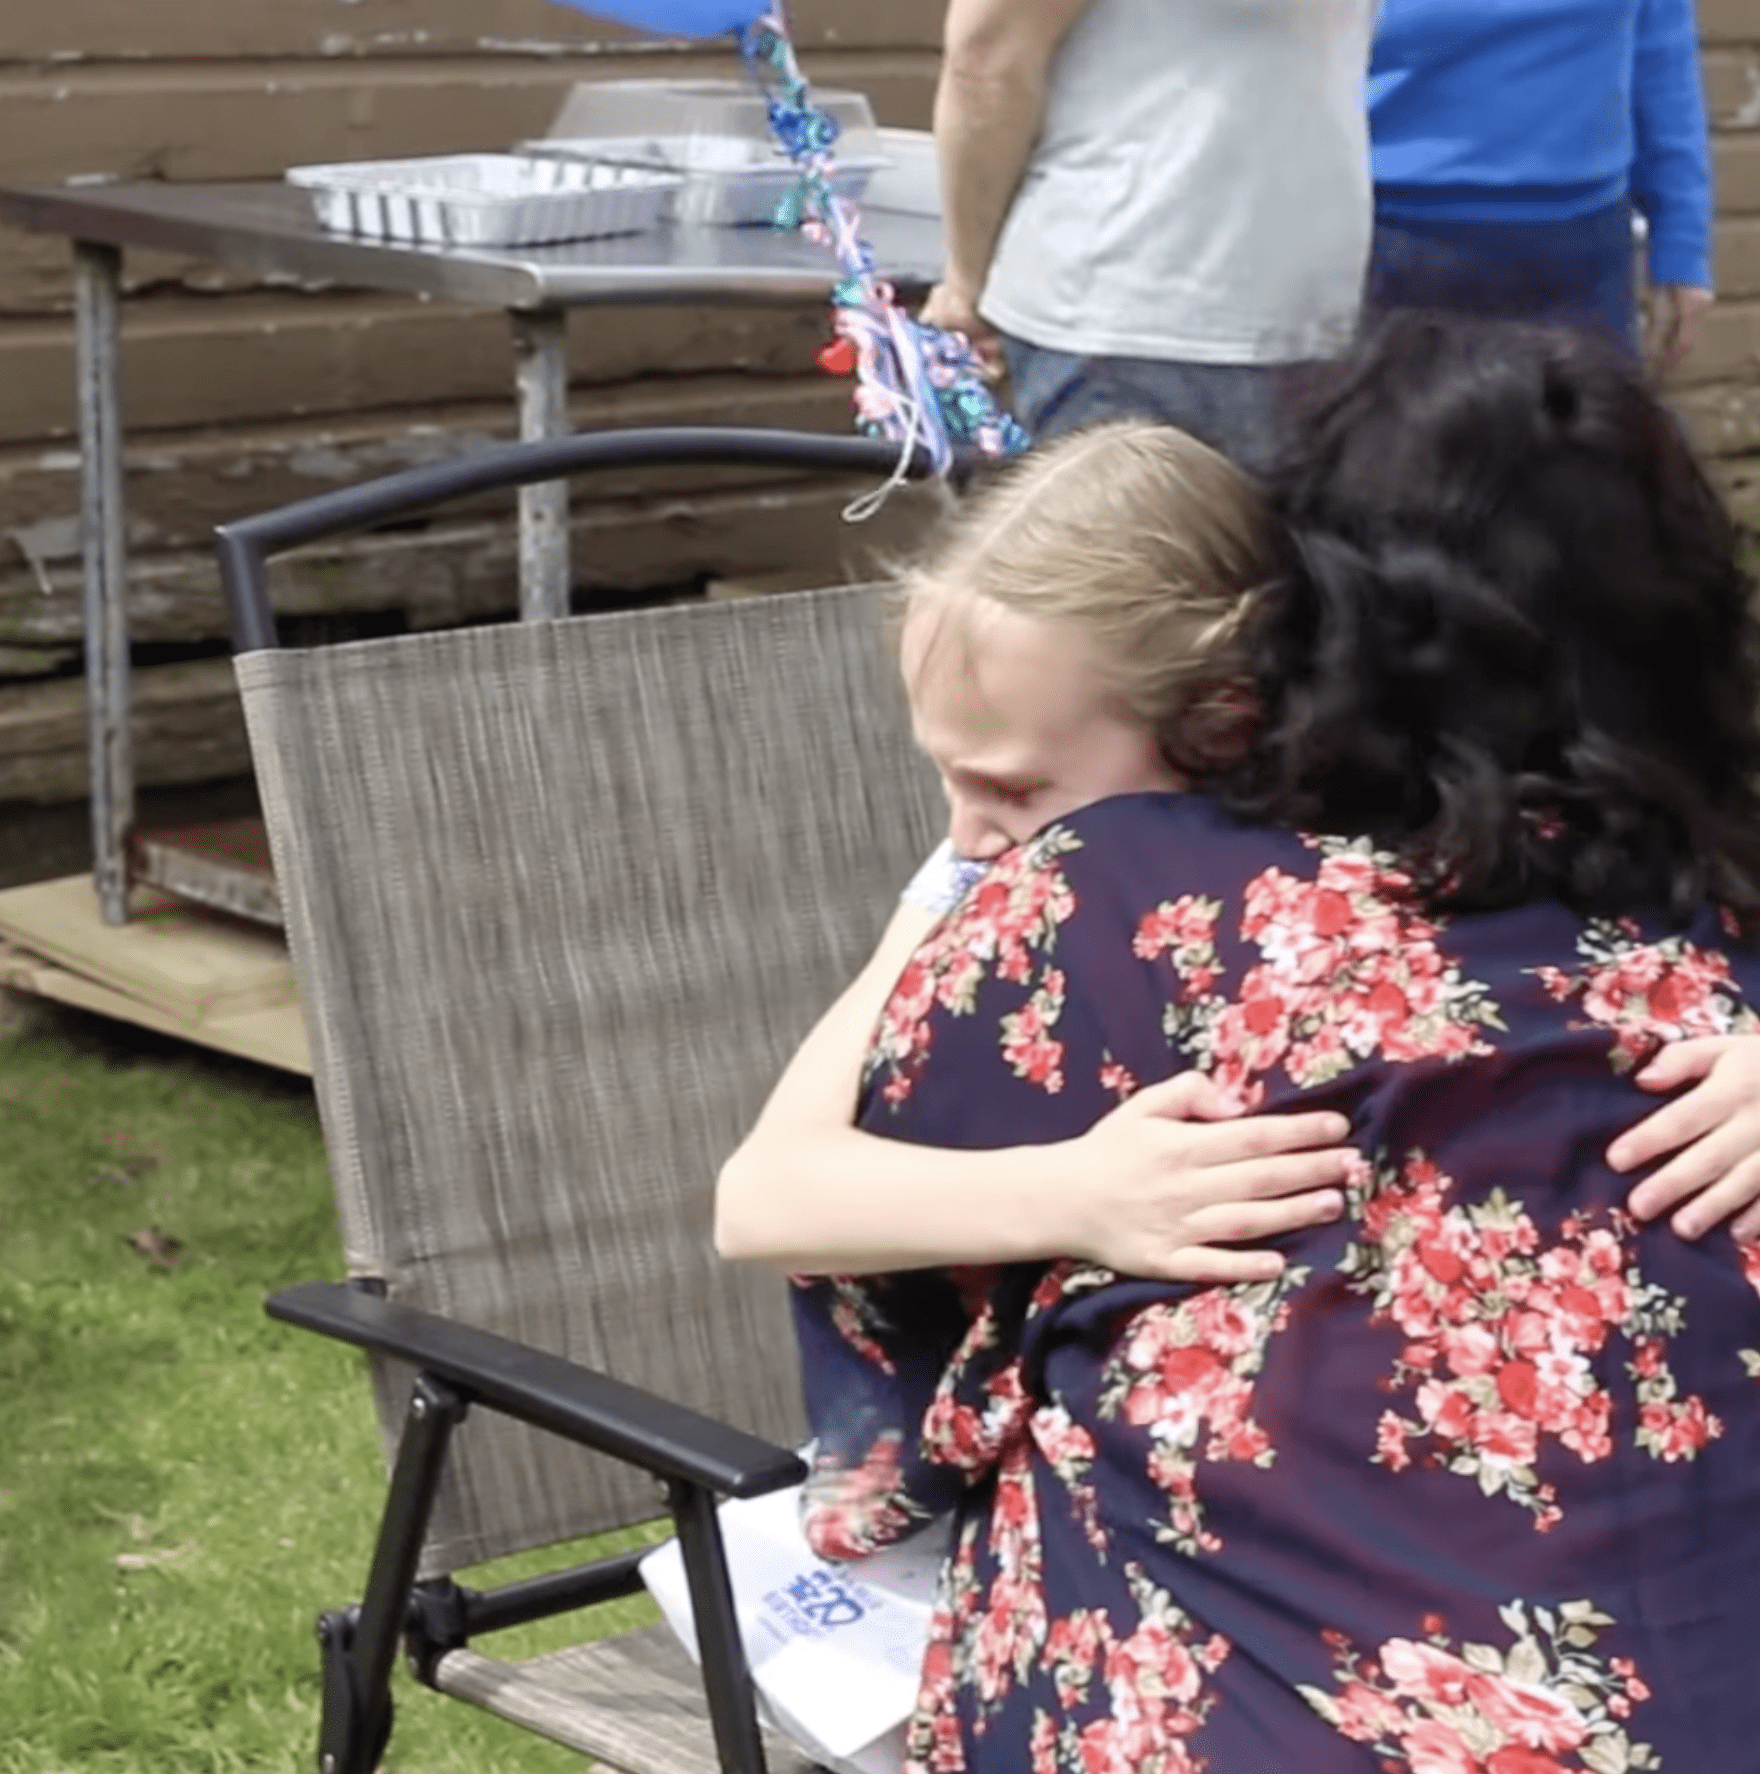 Haley sharing an emotional hug with her stepmom, Brigitte. | Photo: YouTube.com/PokeMyHeart